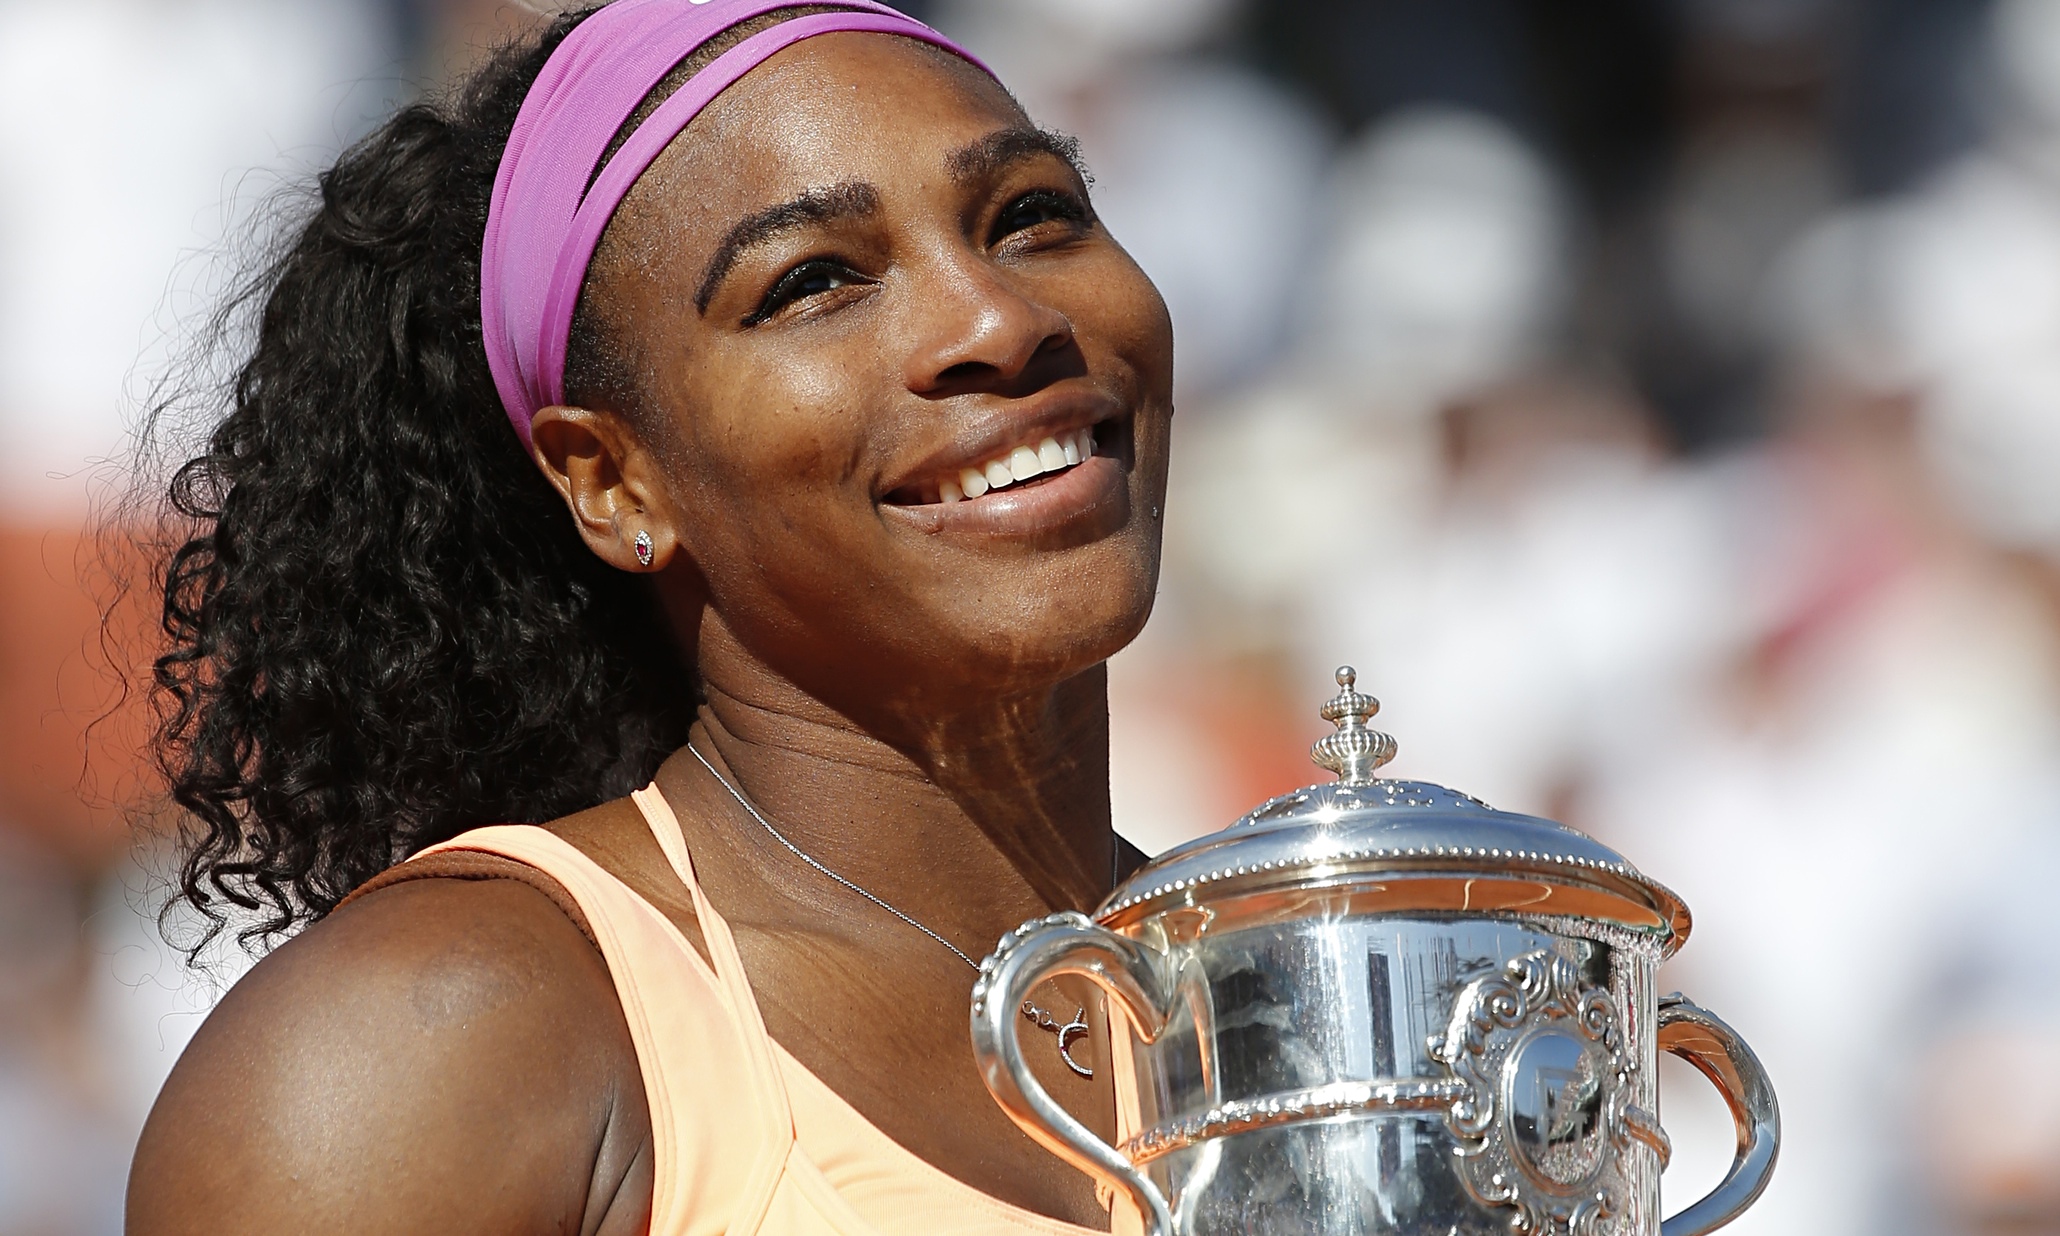 Serena-Williams-